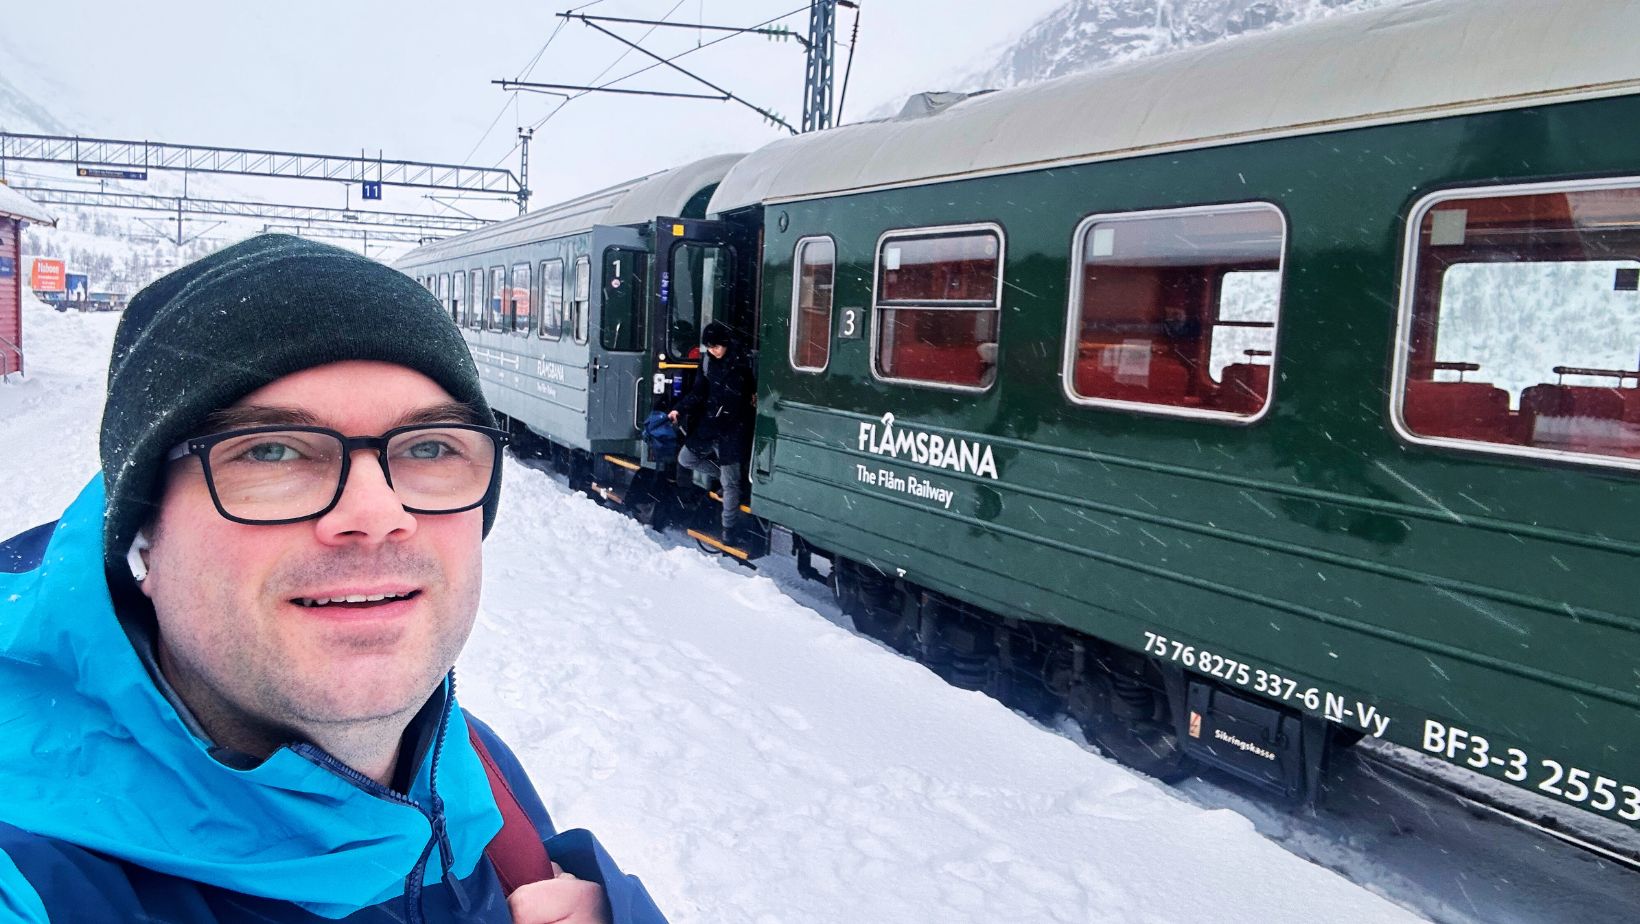 David on the Flåm Railway in the winter. Photo: David Nikel.